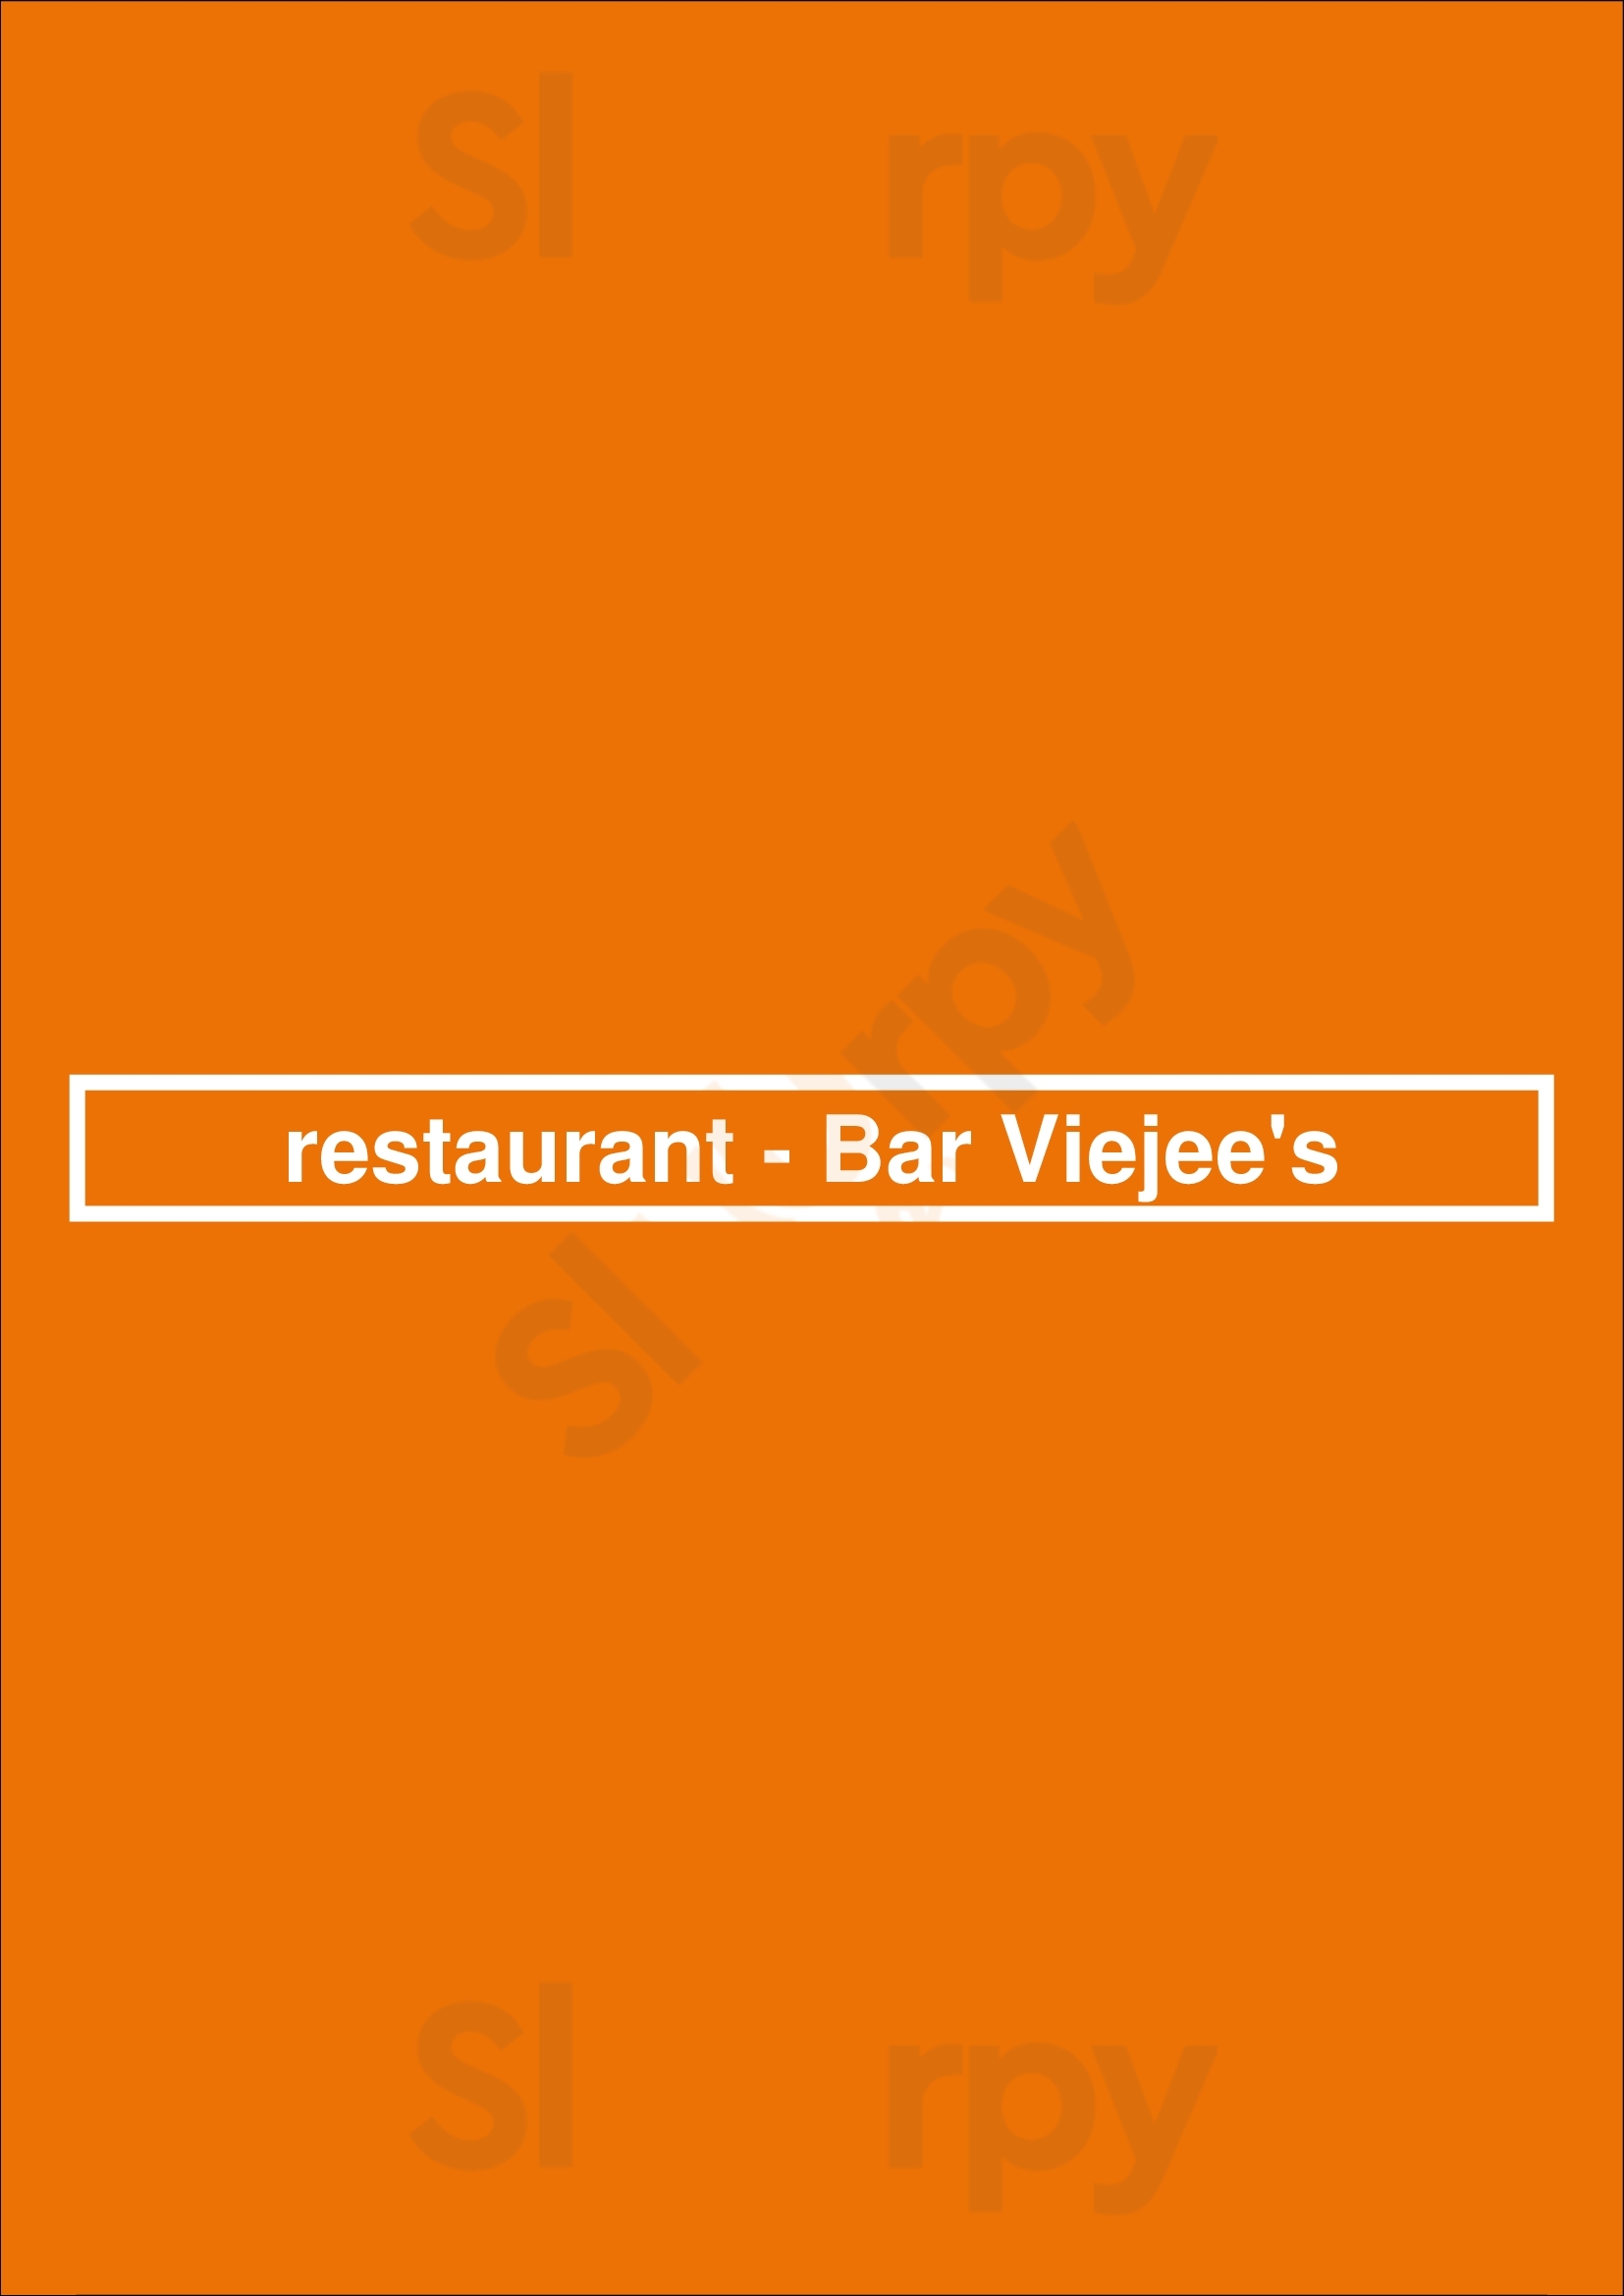 Restaurant - Bar Viejee's Gouda Menu - 1